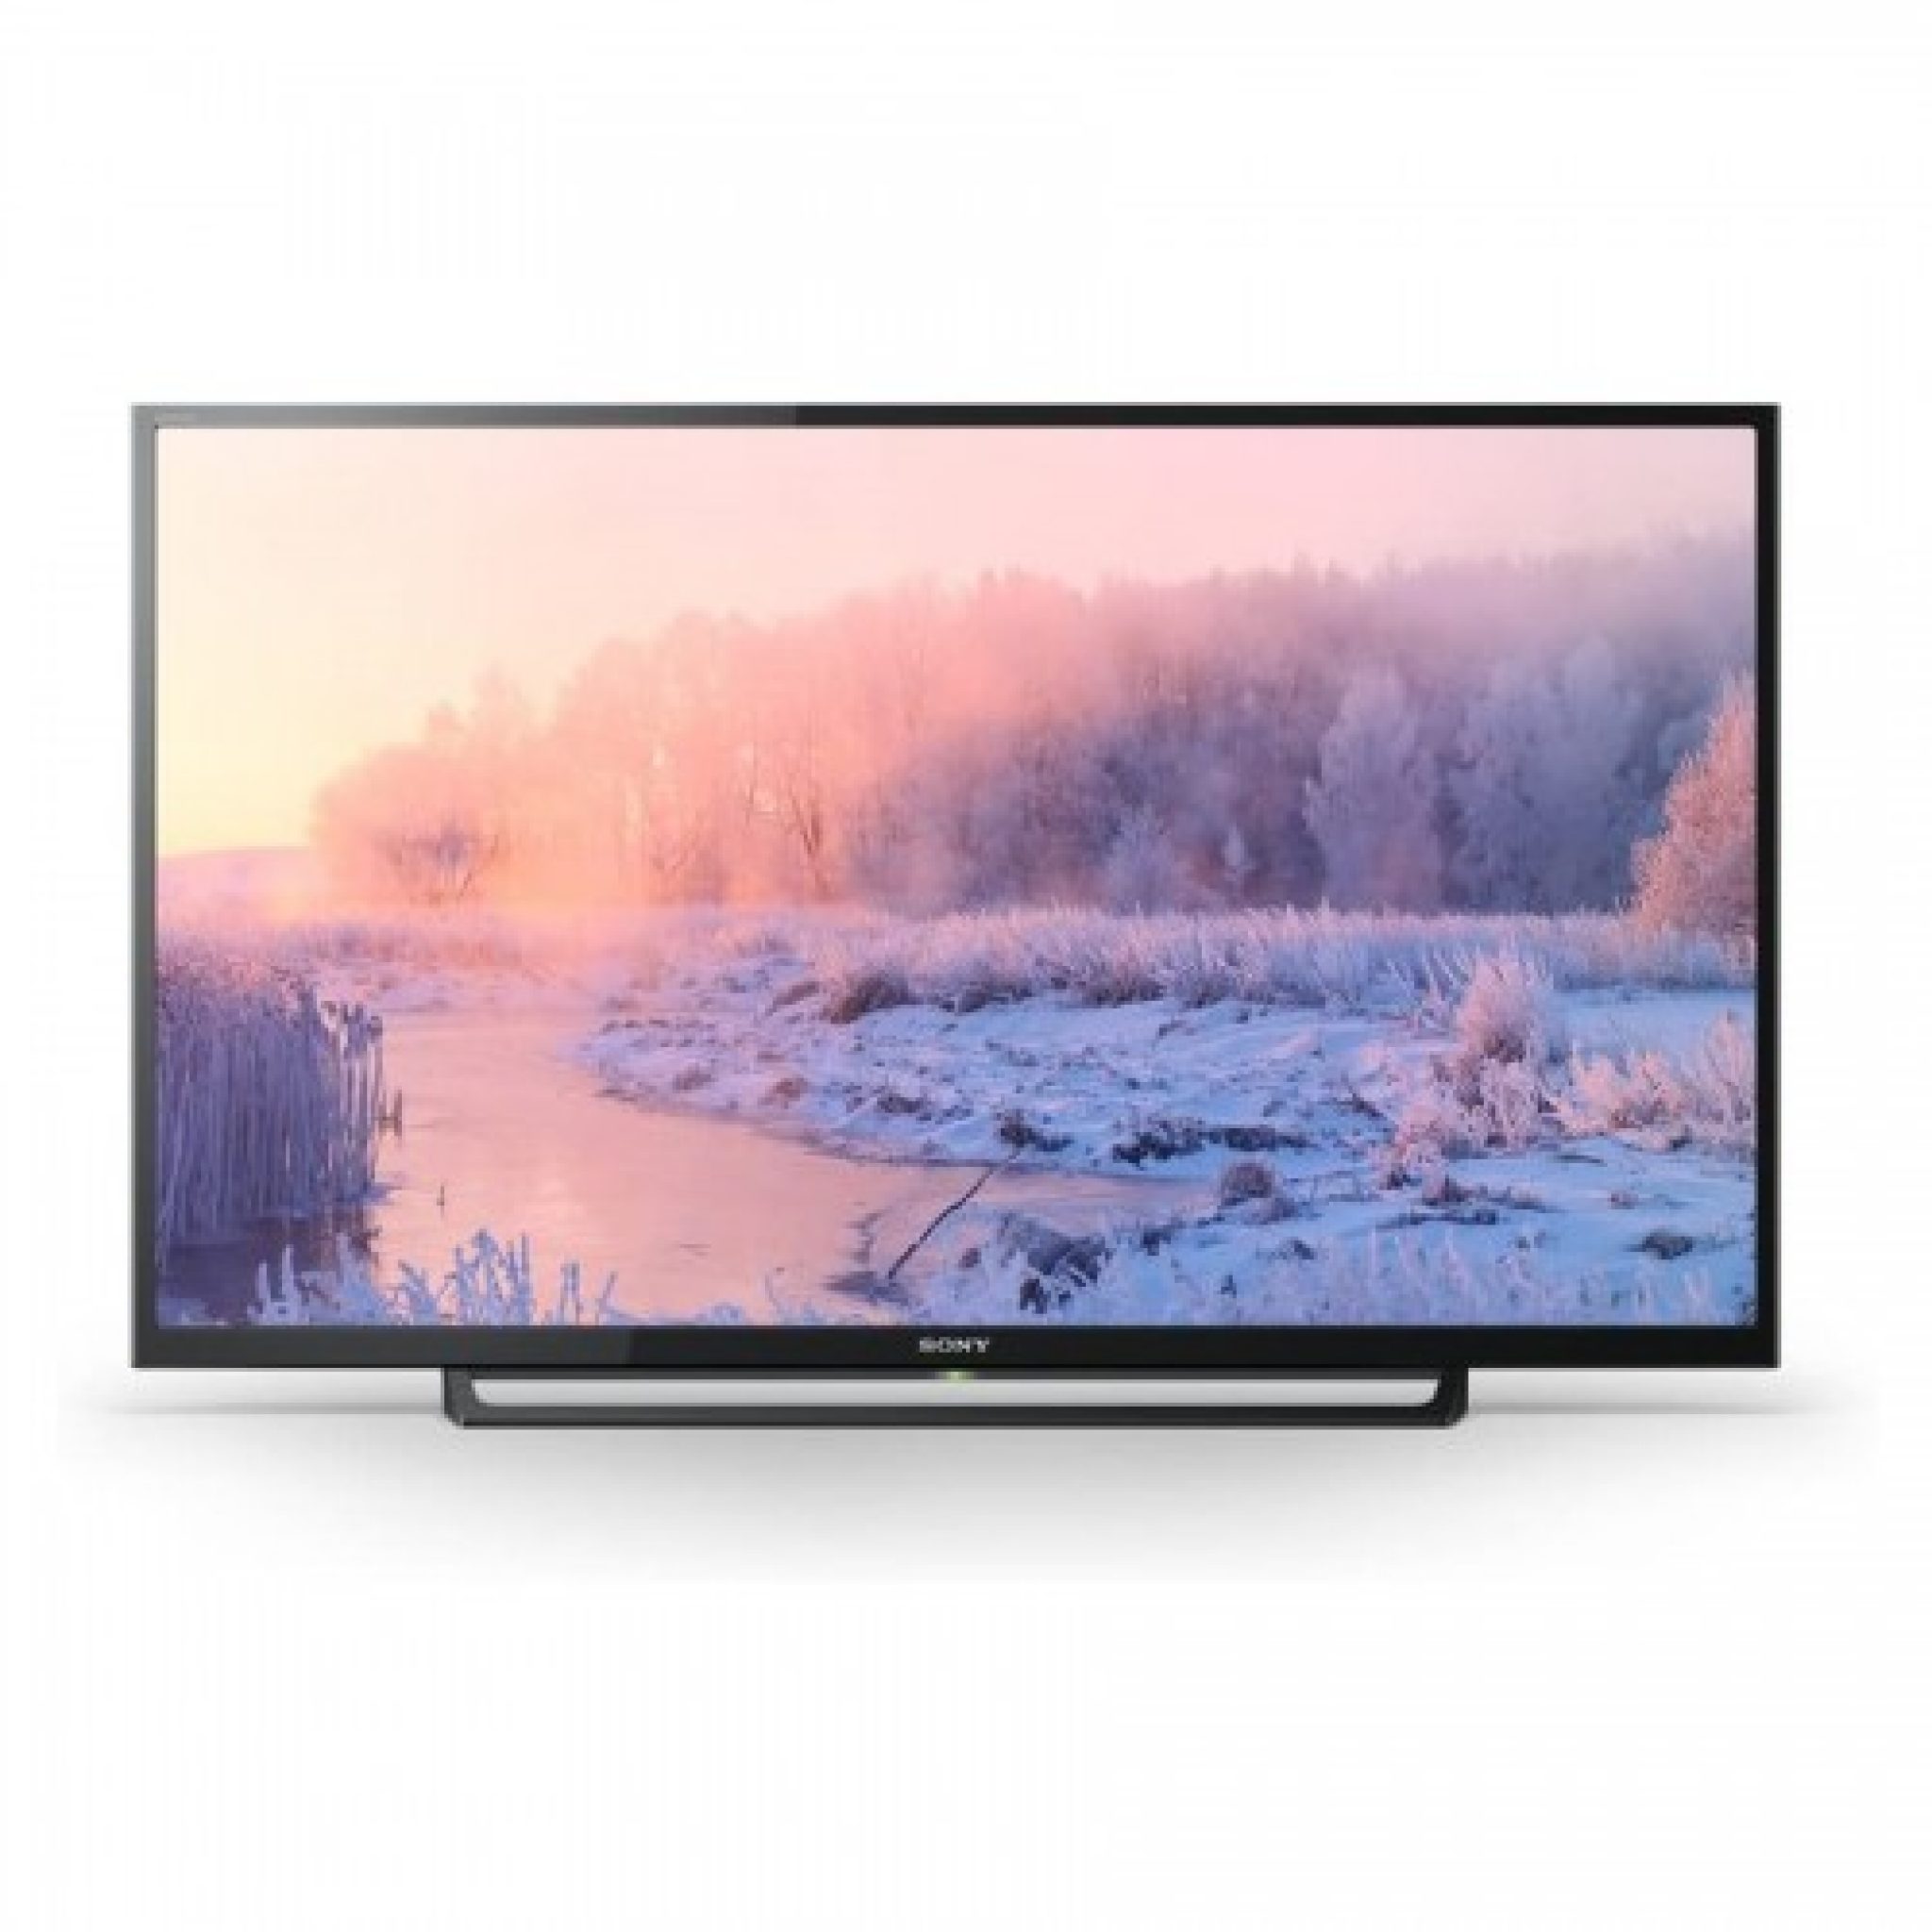 SONY Bravia KDL-32R300E 32â€³ HD Non Smart LED TV | TV Shop BD